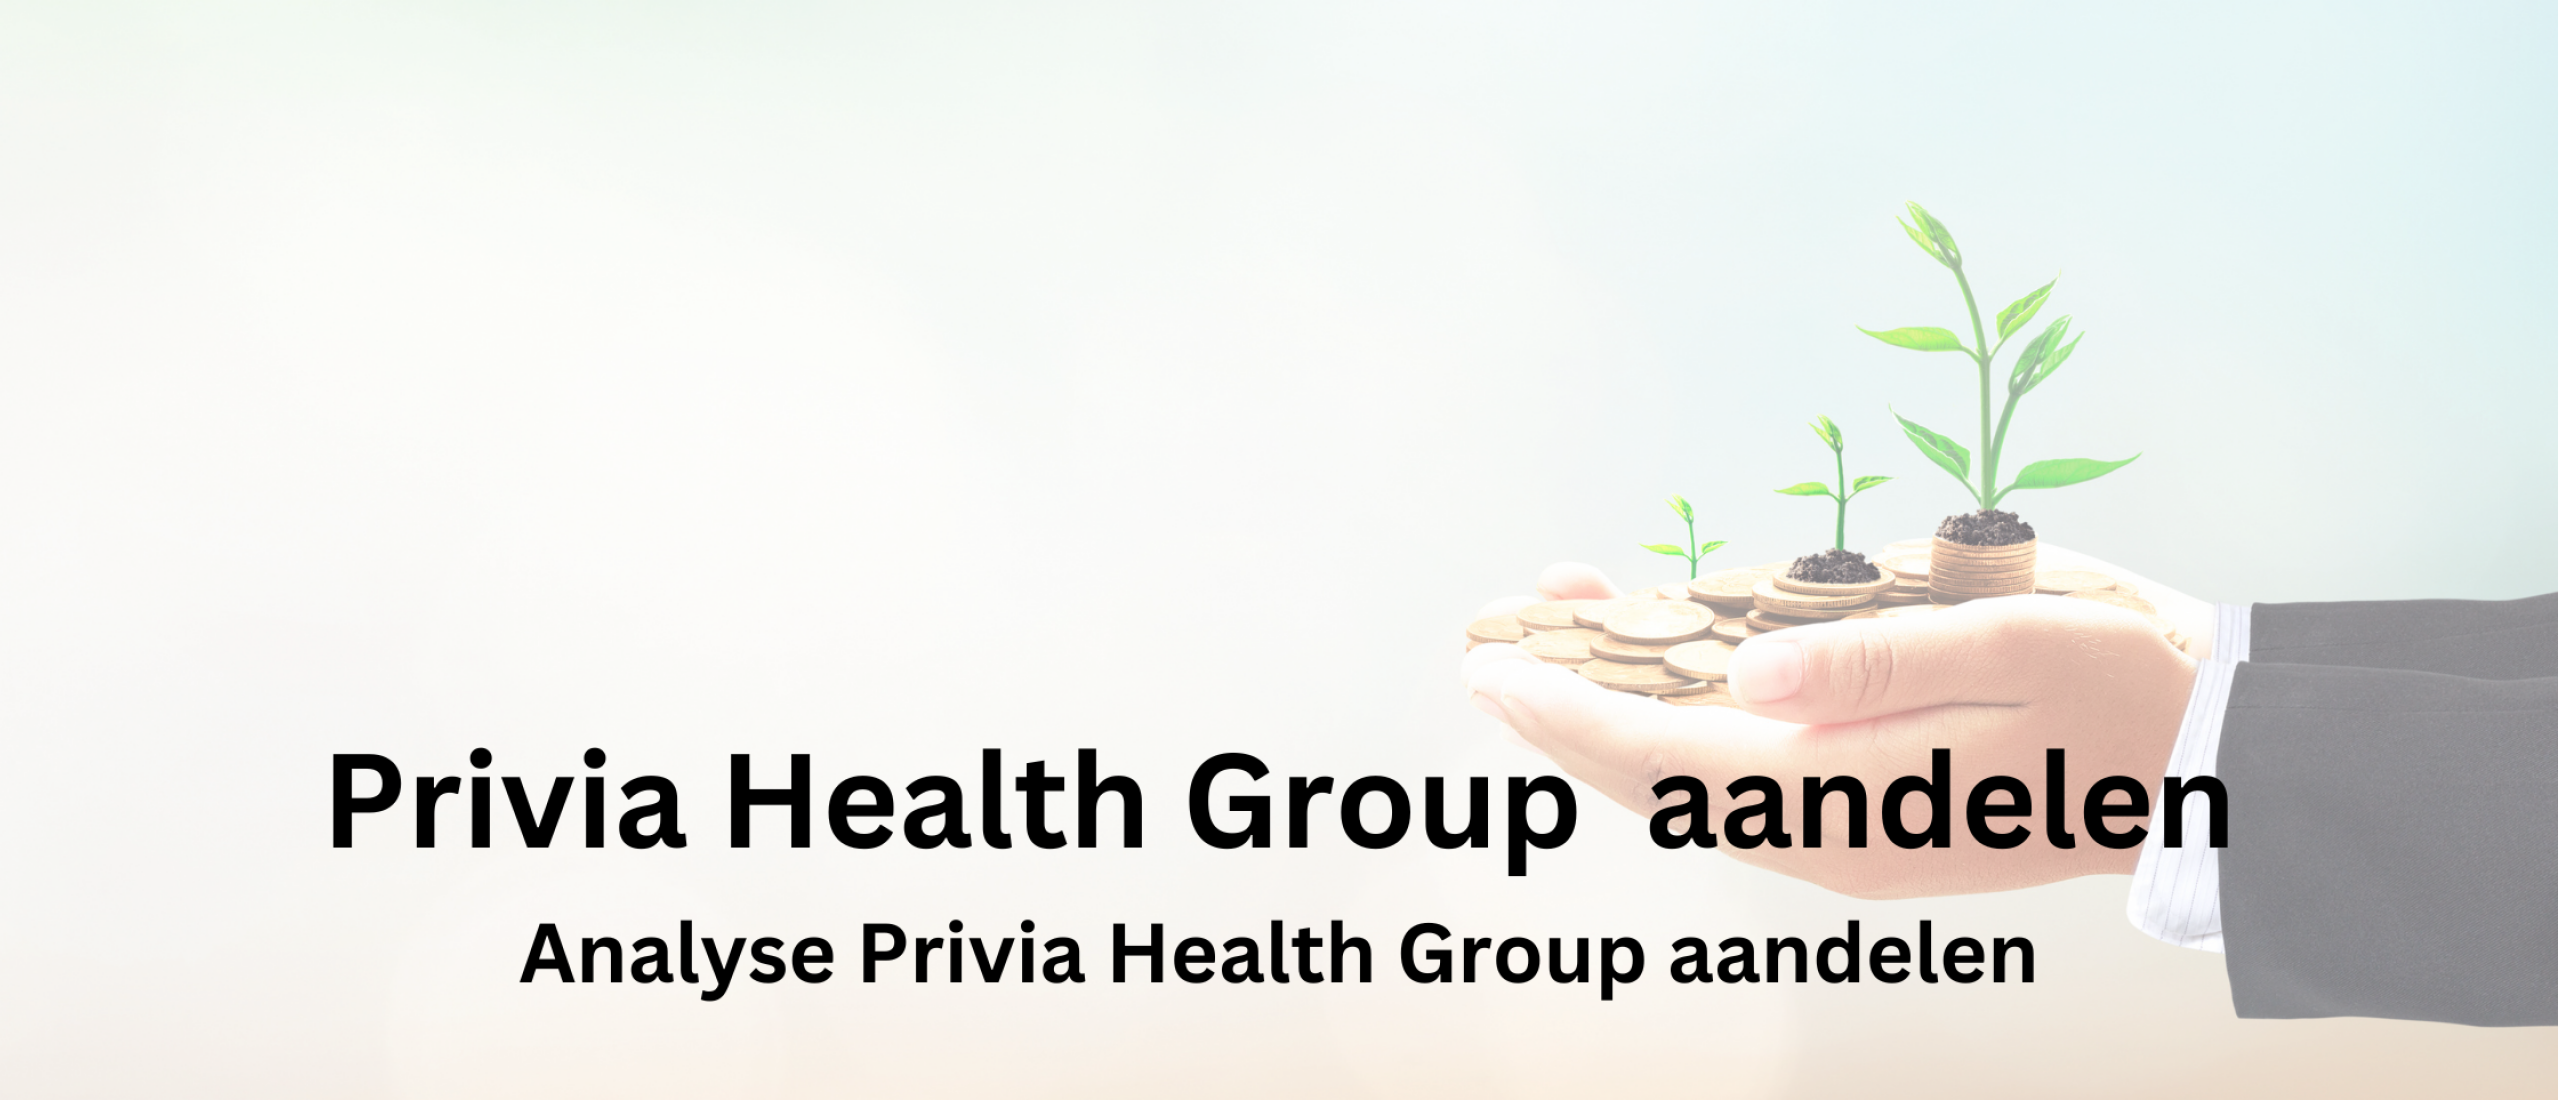 privia-health-group-